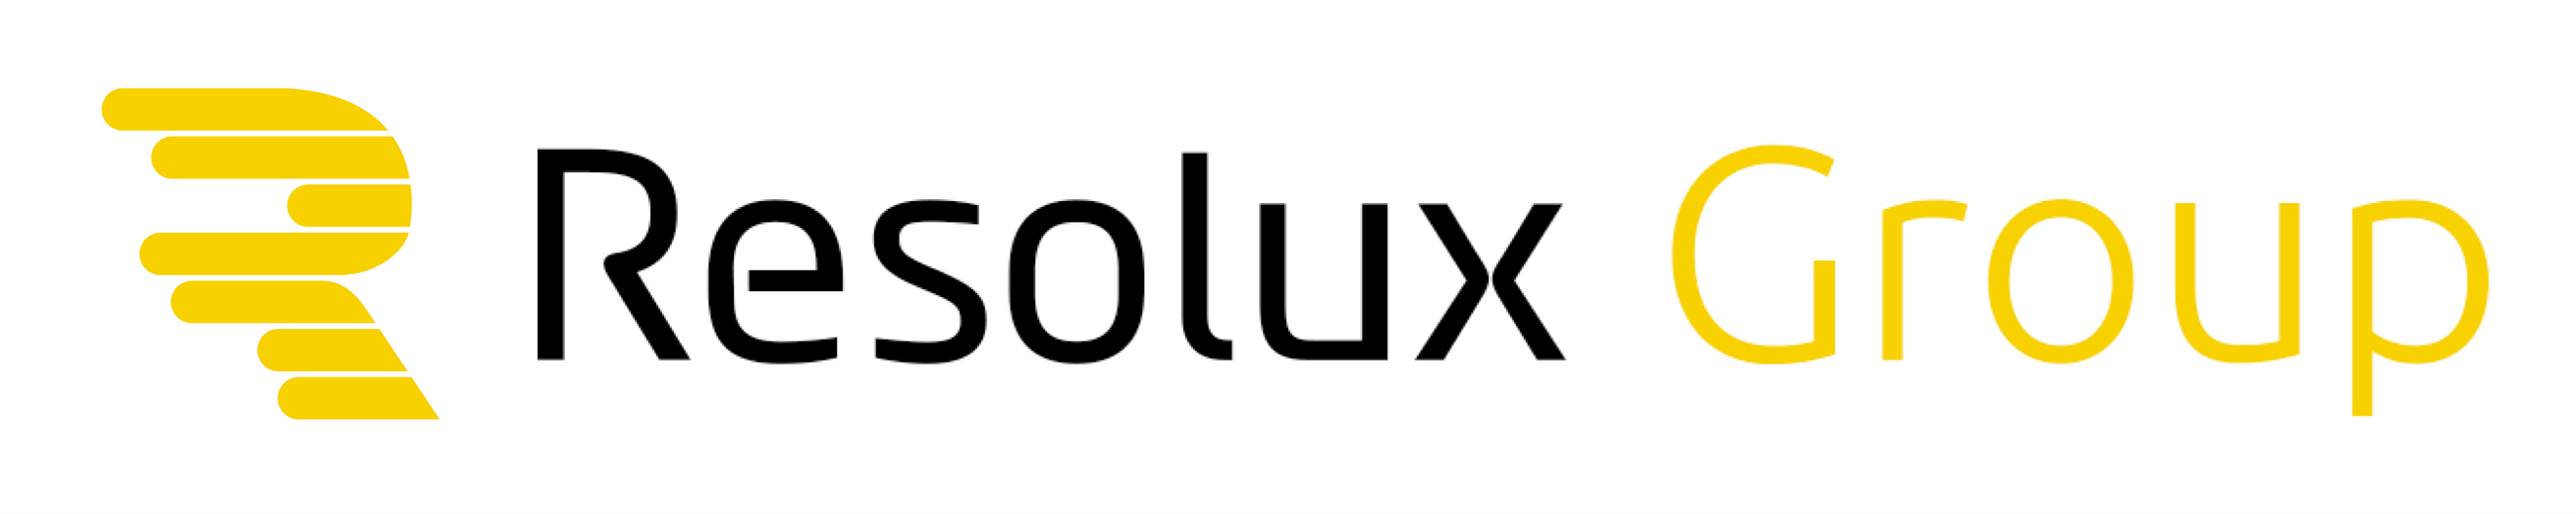 r resolux group logo